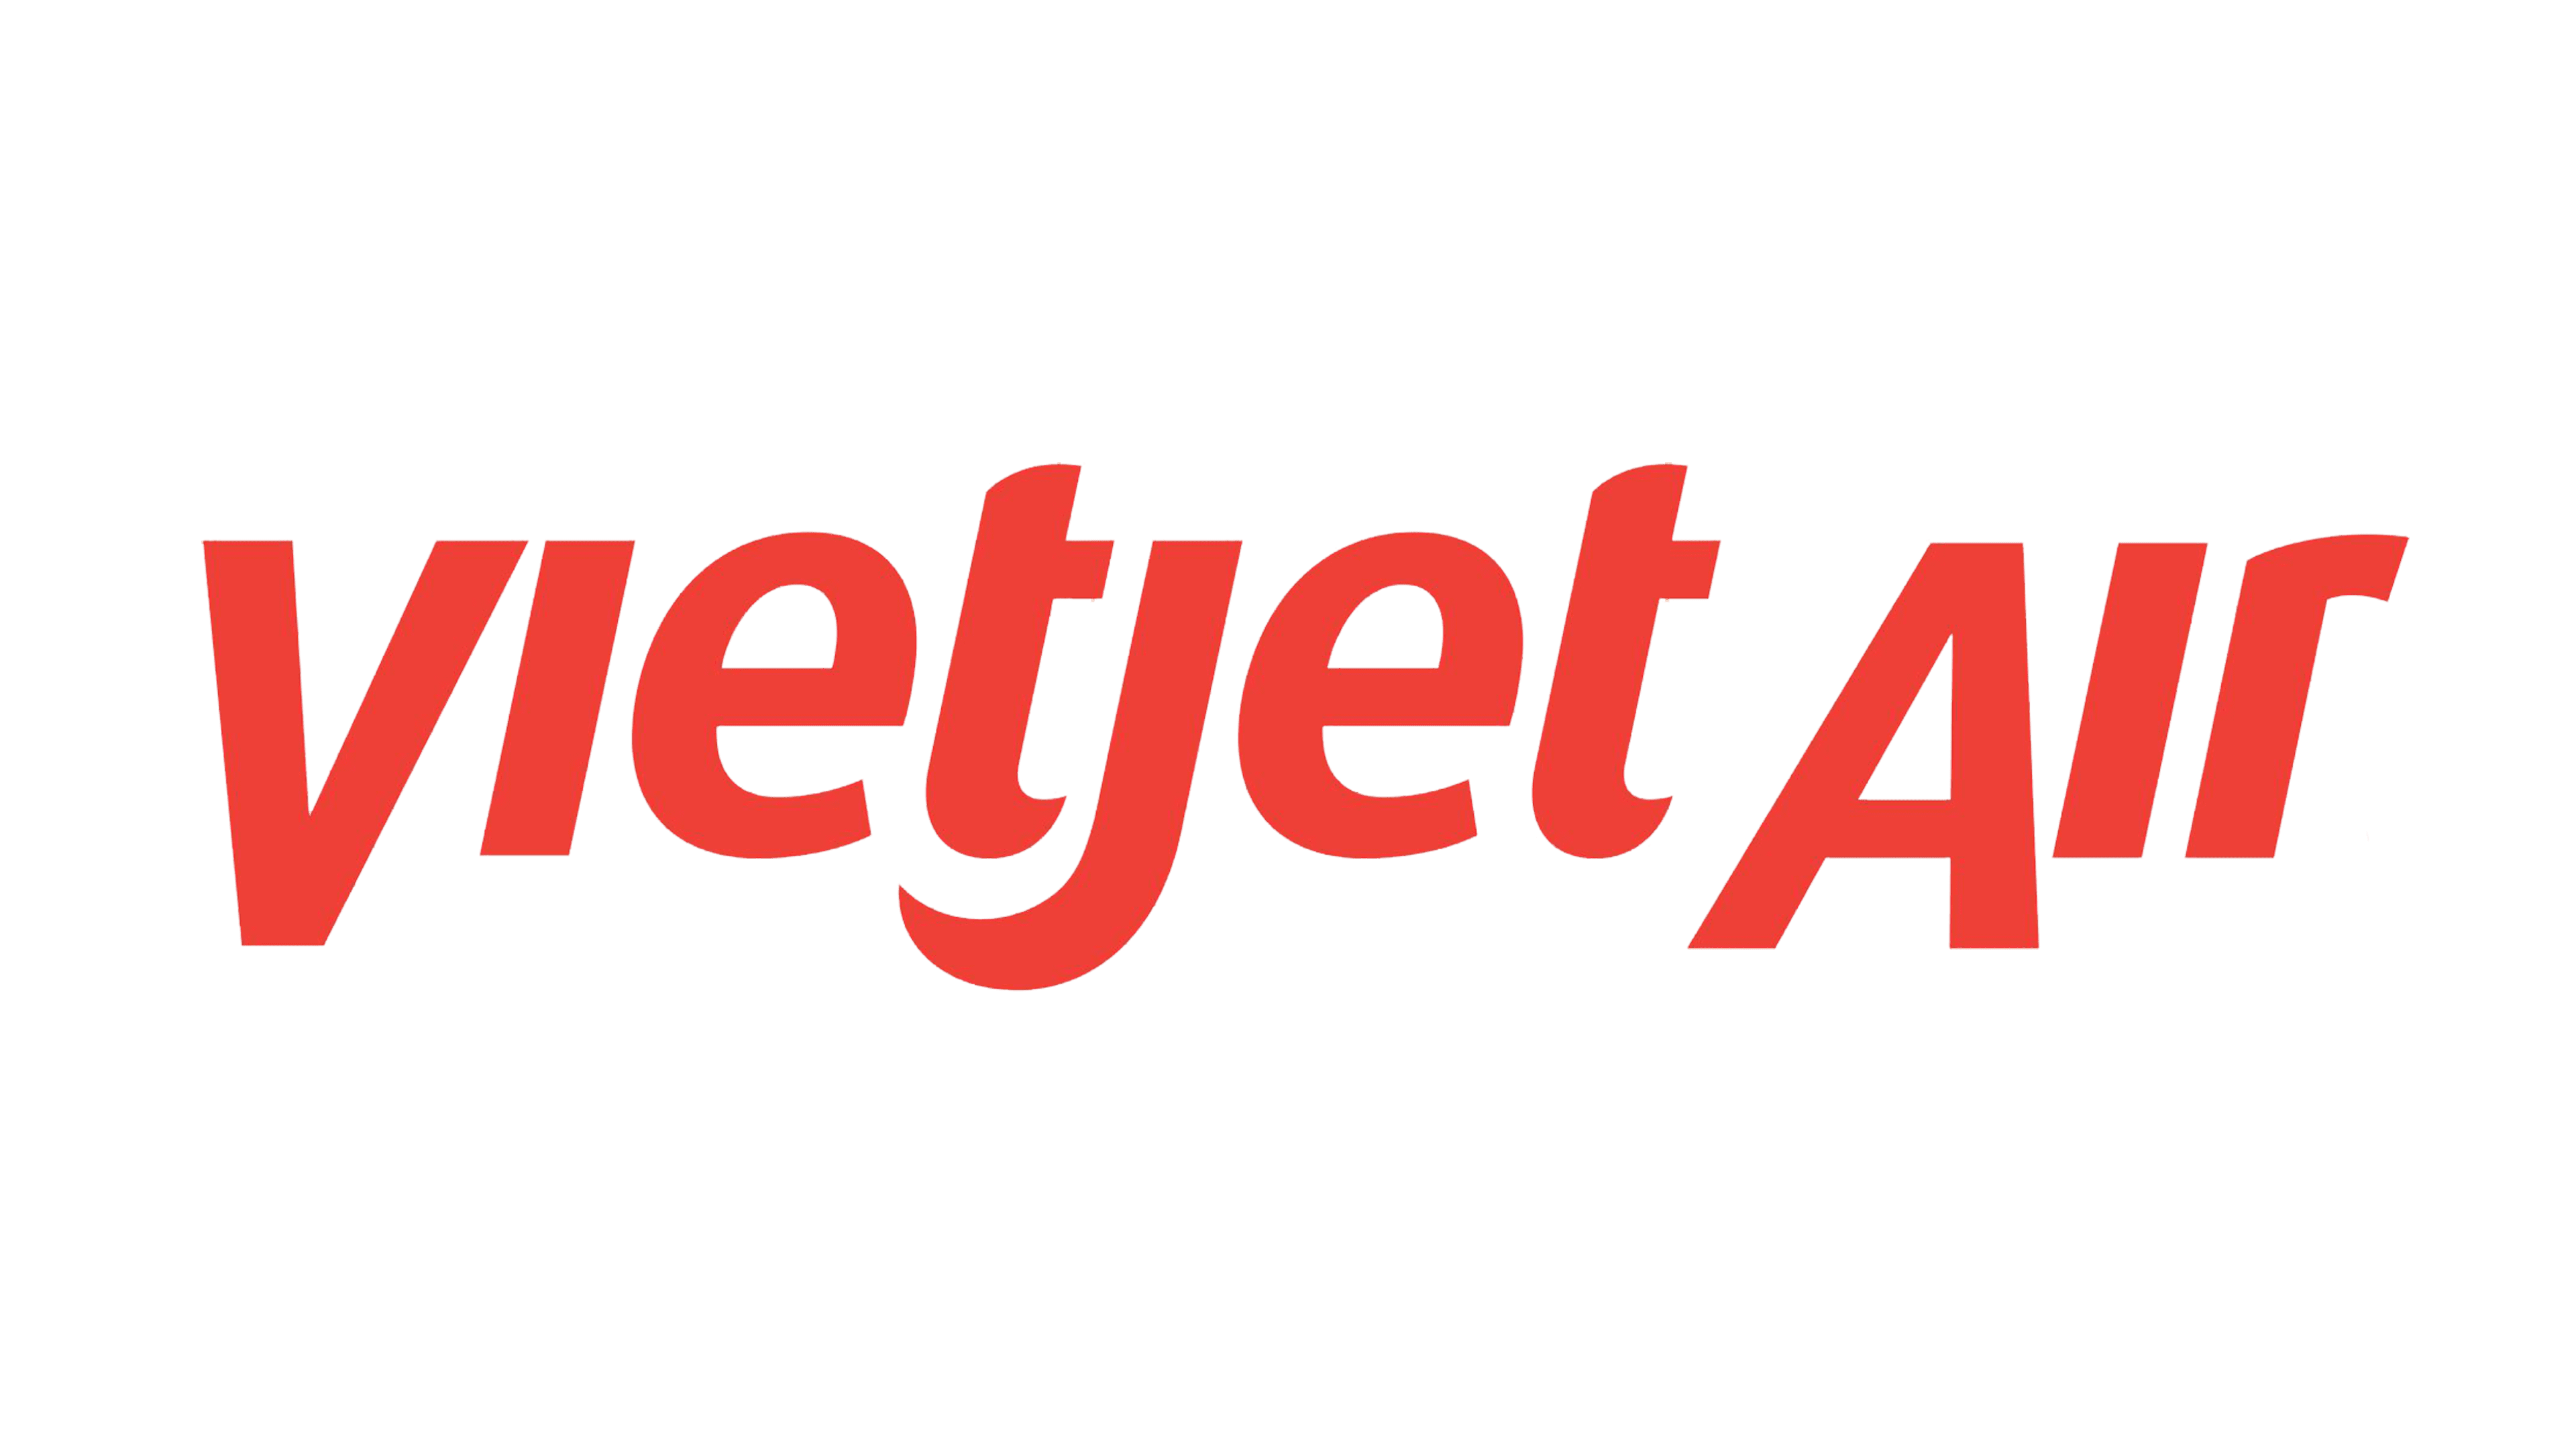 VietJet Airways